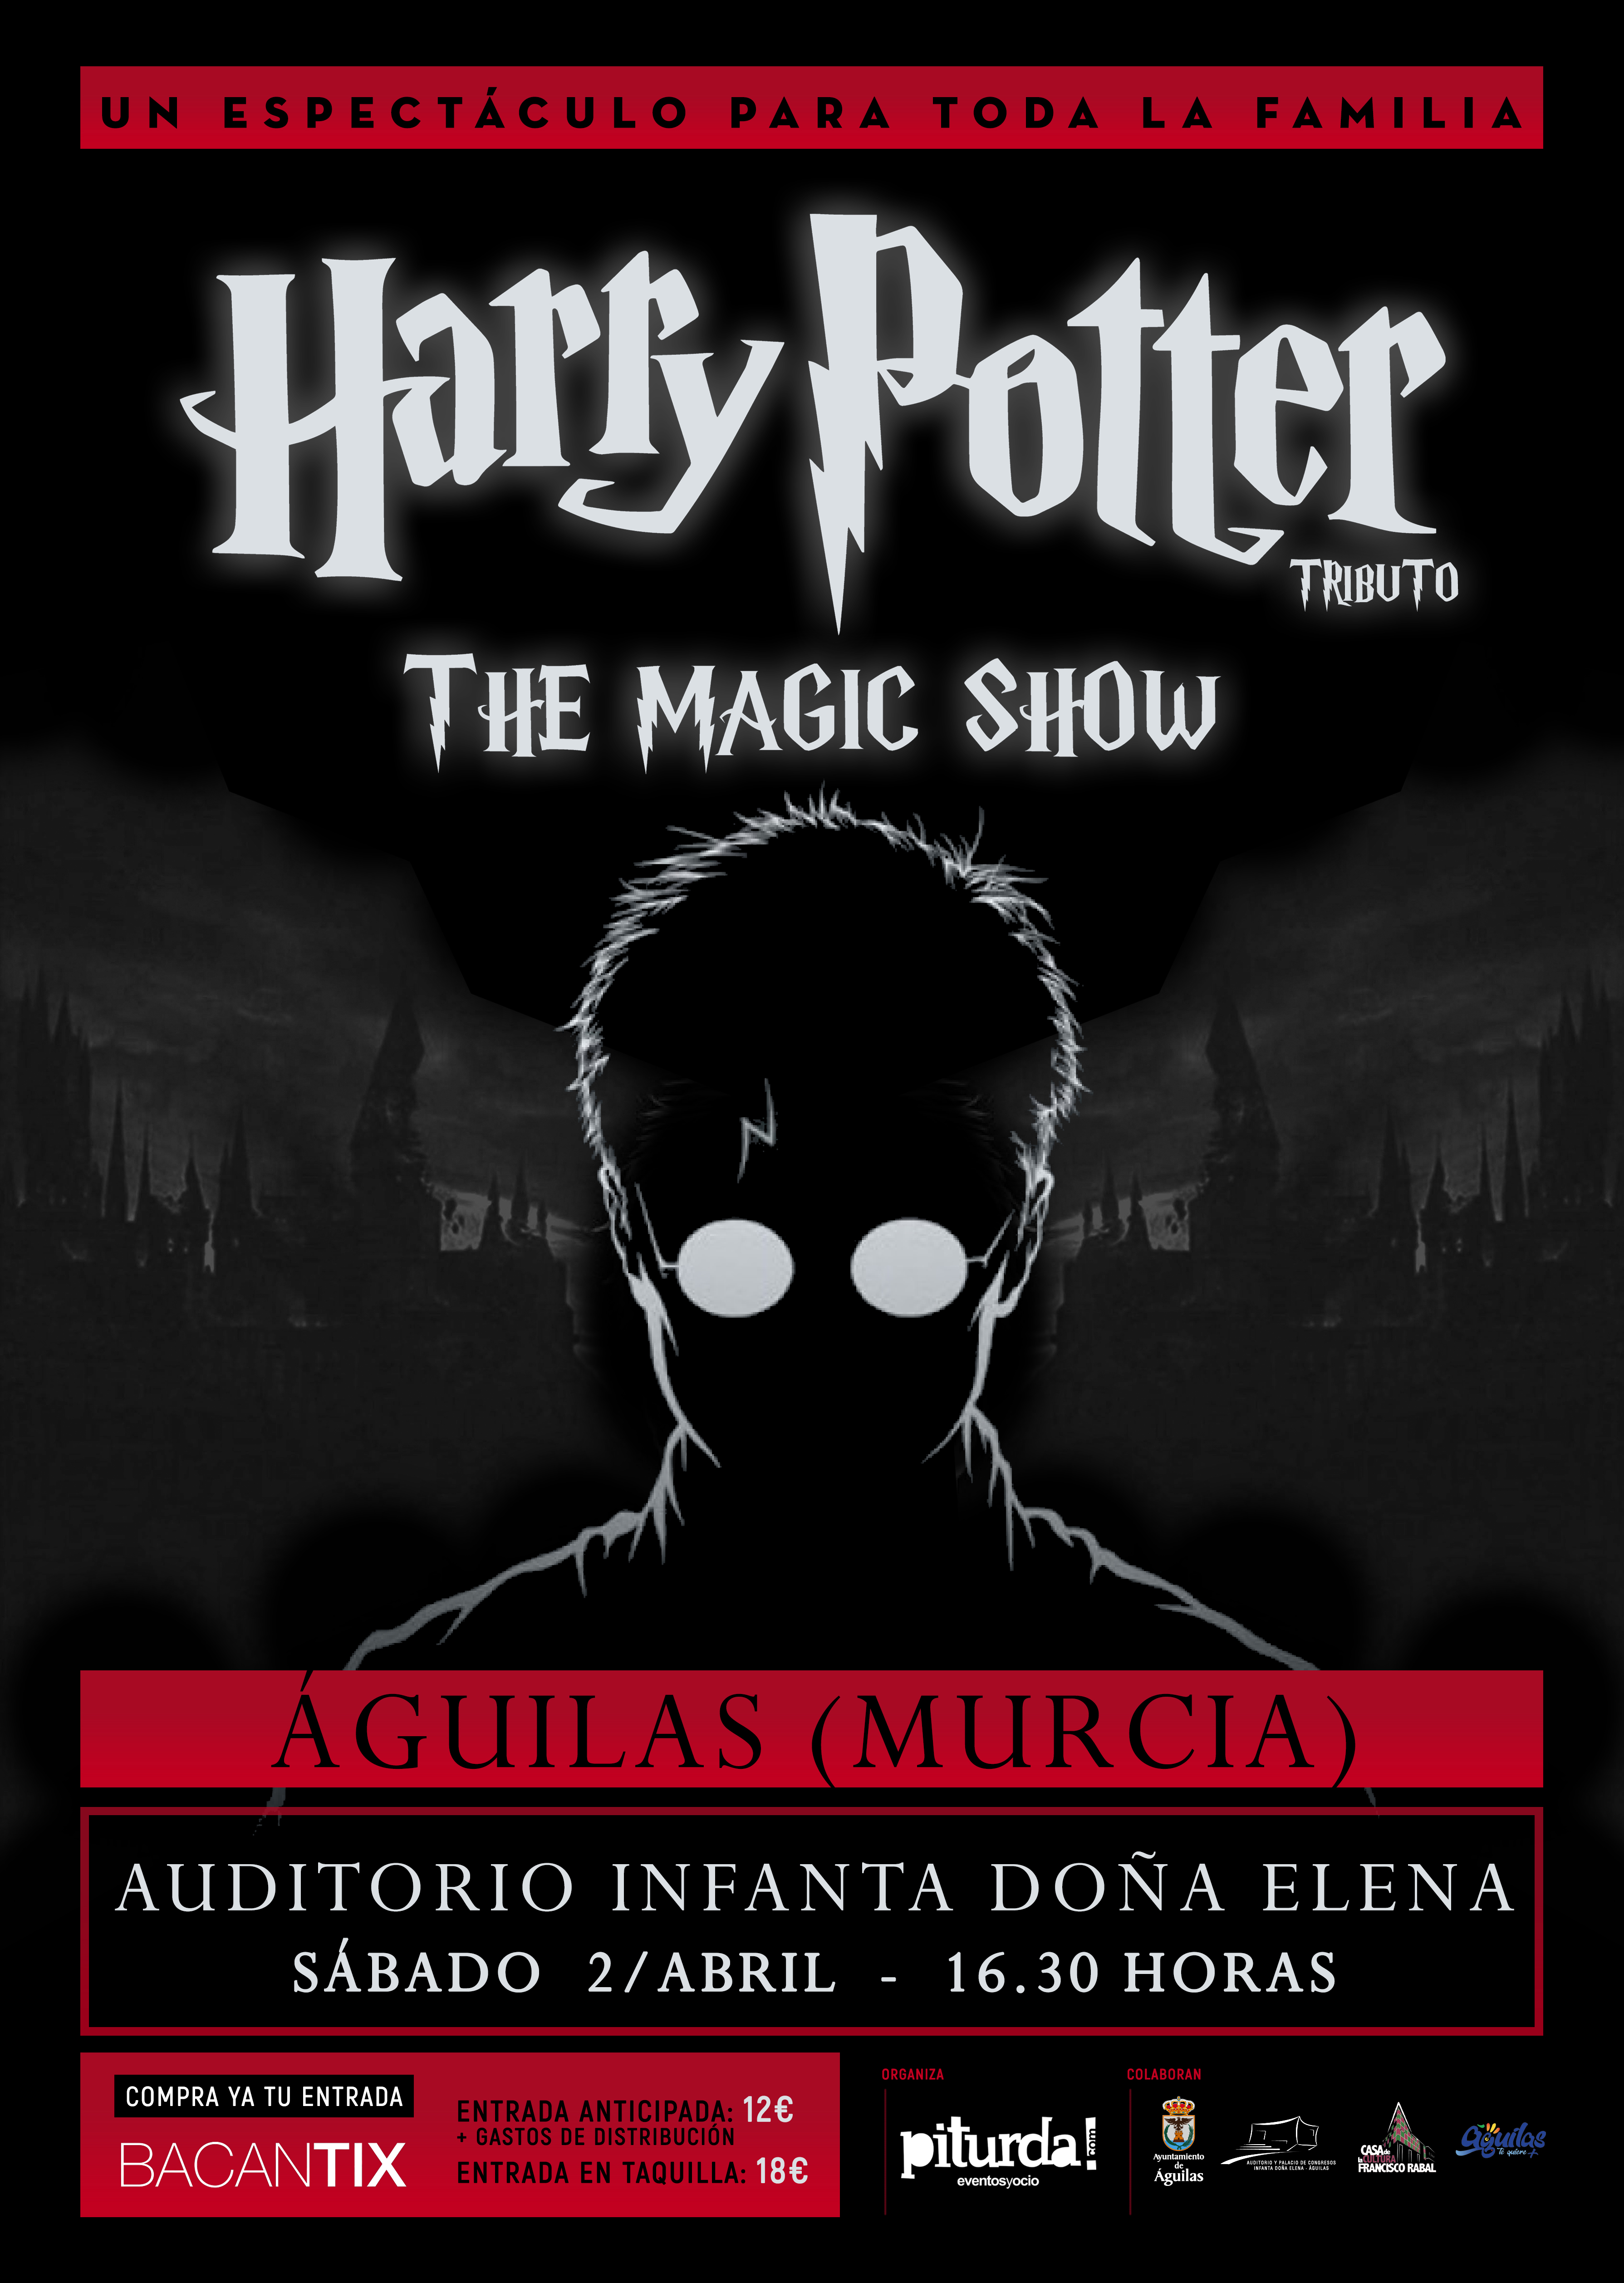 Harry Potter Tributo - The Magic Show